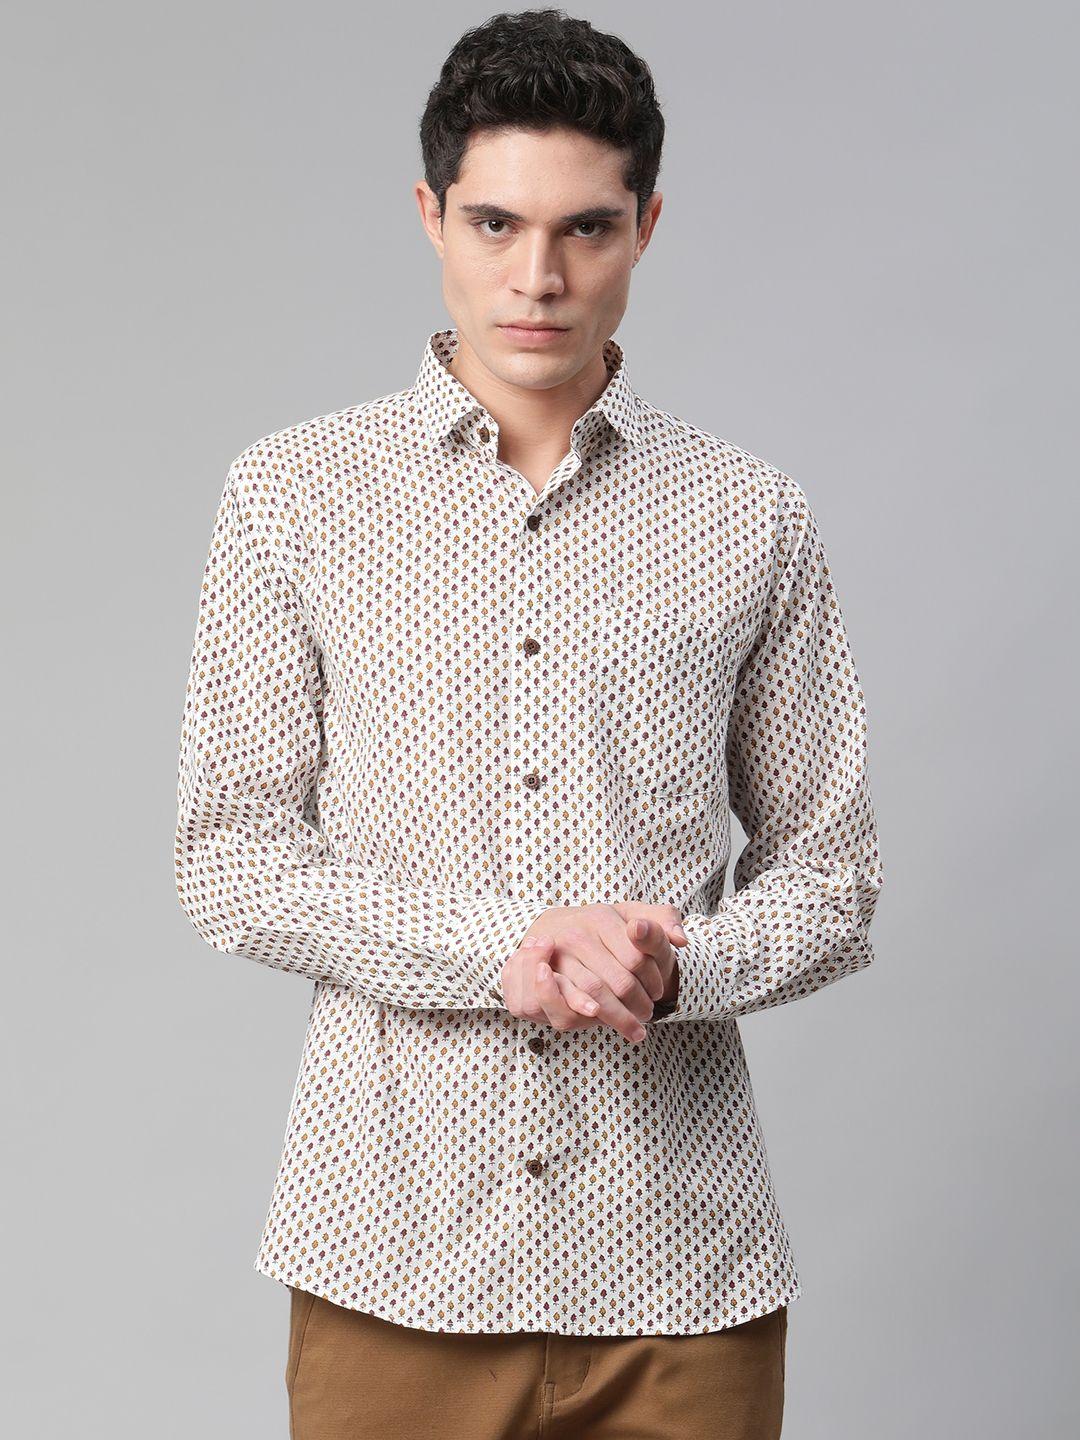 millennial men white comfort printed casual shirt